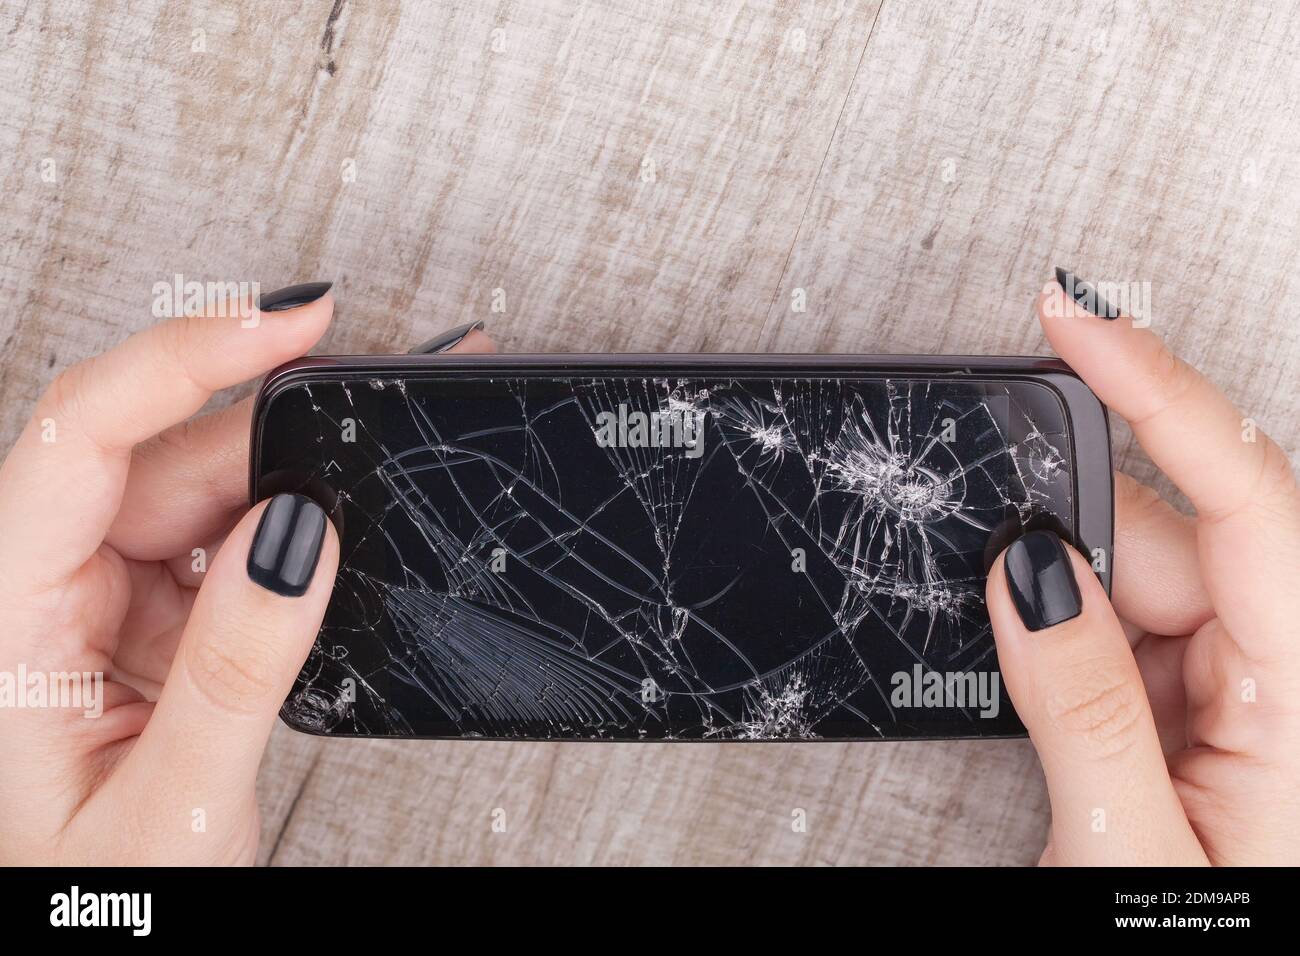 Она разбила телефон. Разбитый айфон. Разбитый айфон в руке. Разбитый смартфон в руке. Сломанный айфон в руке.